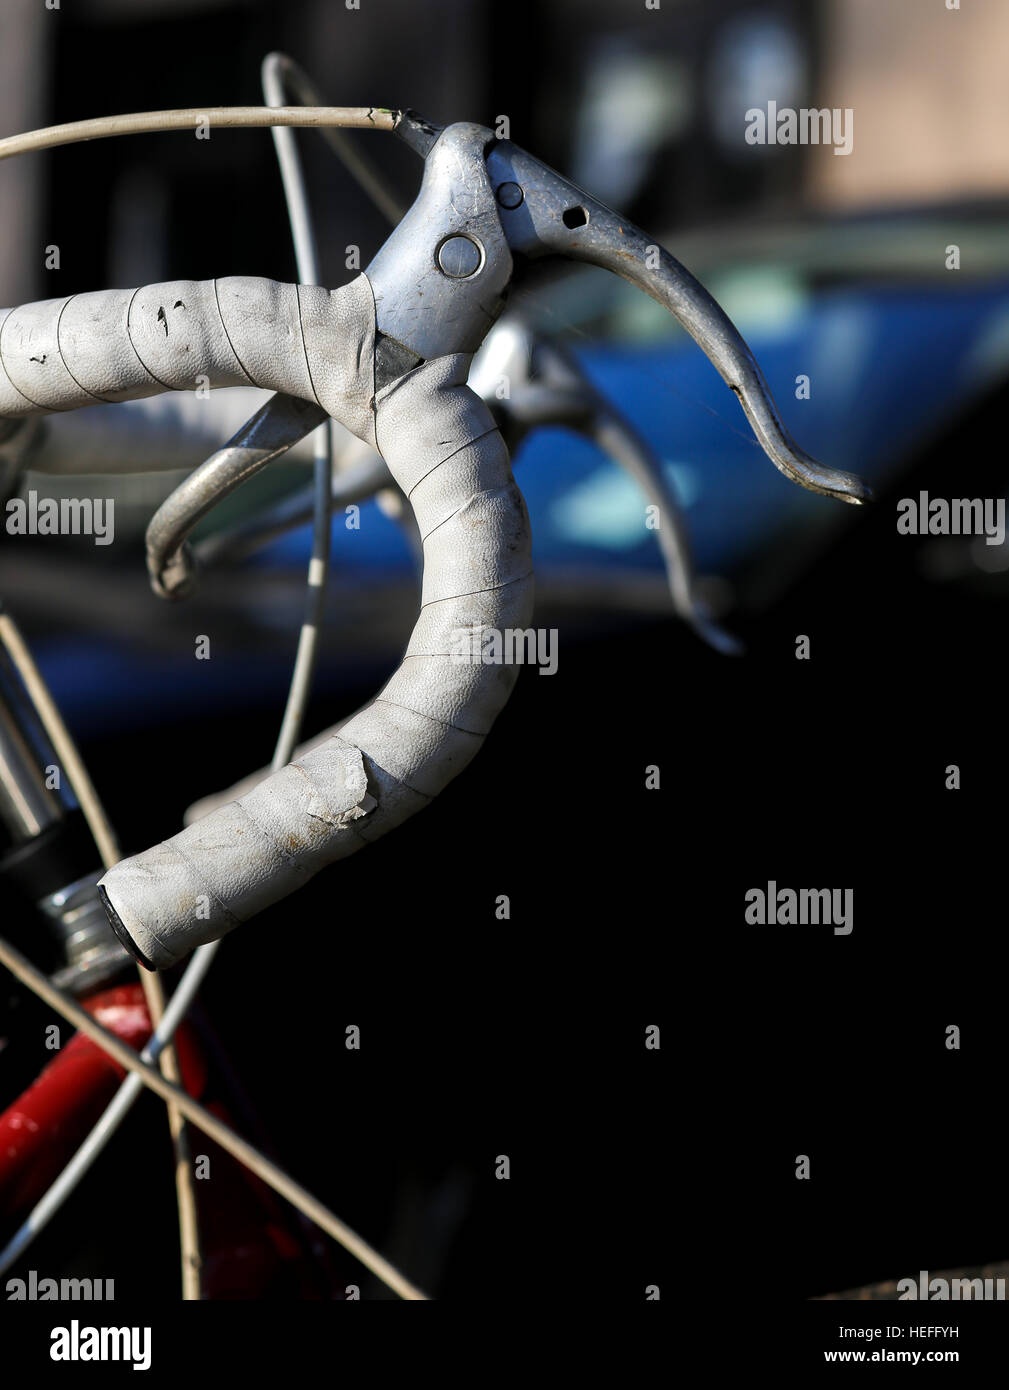 Focus on handle grip of white vintage racing bike on dark background Stock Photo